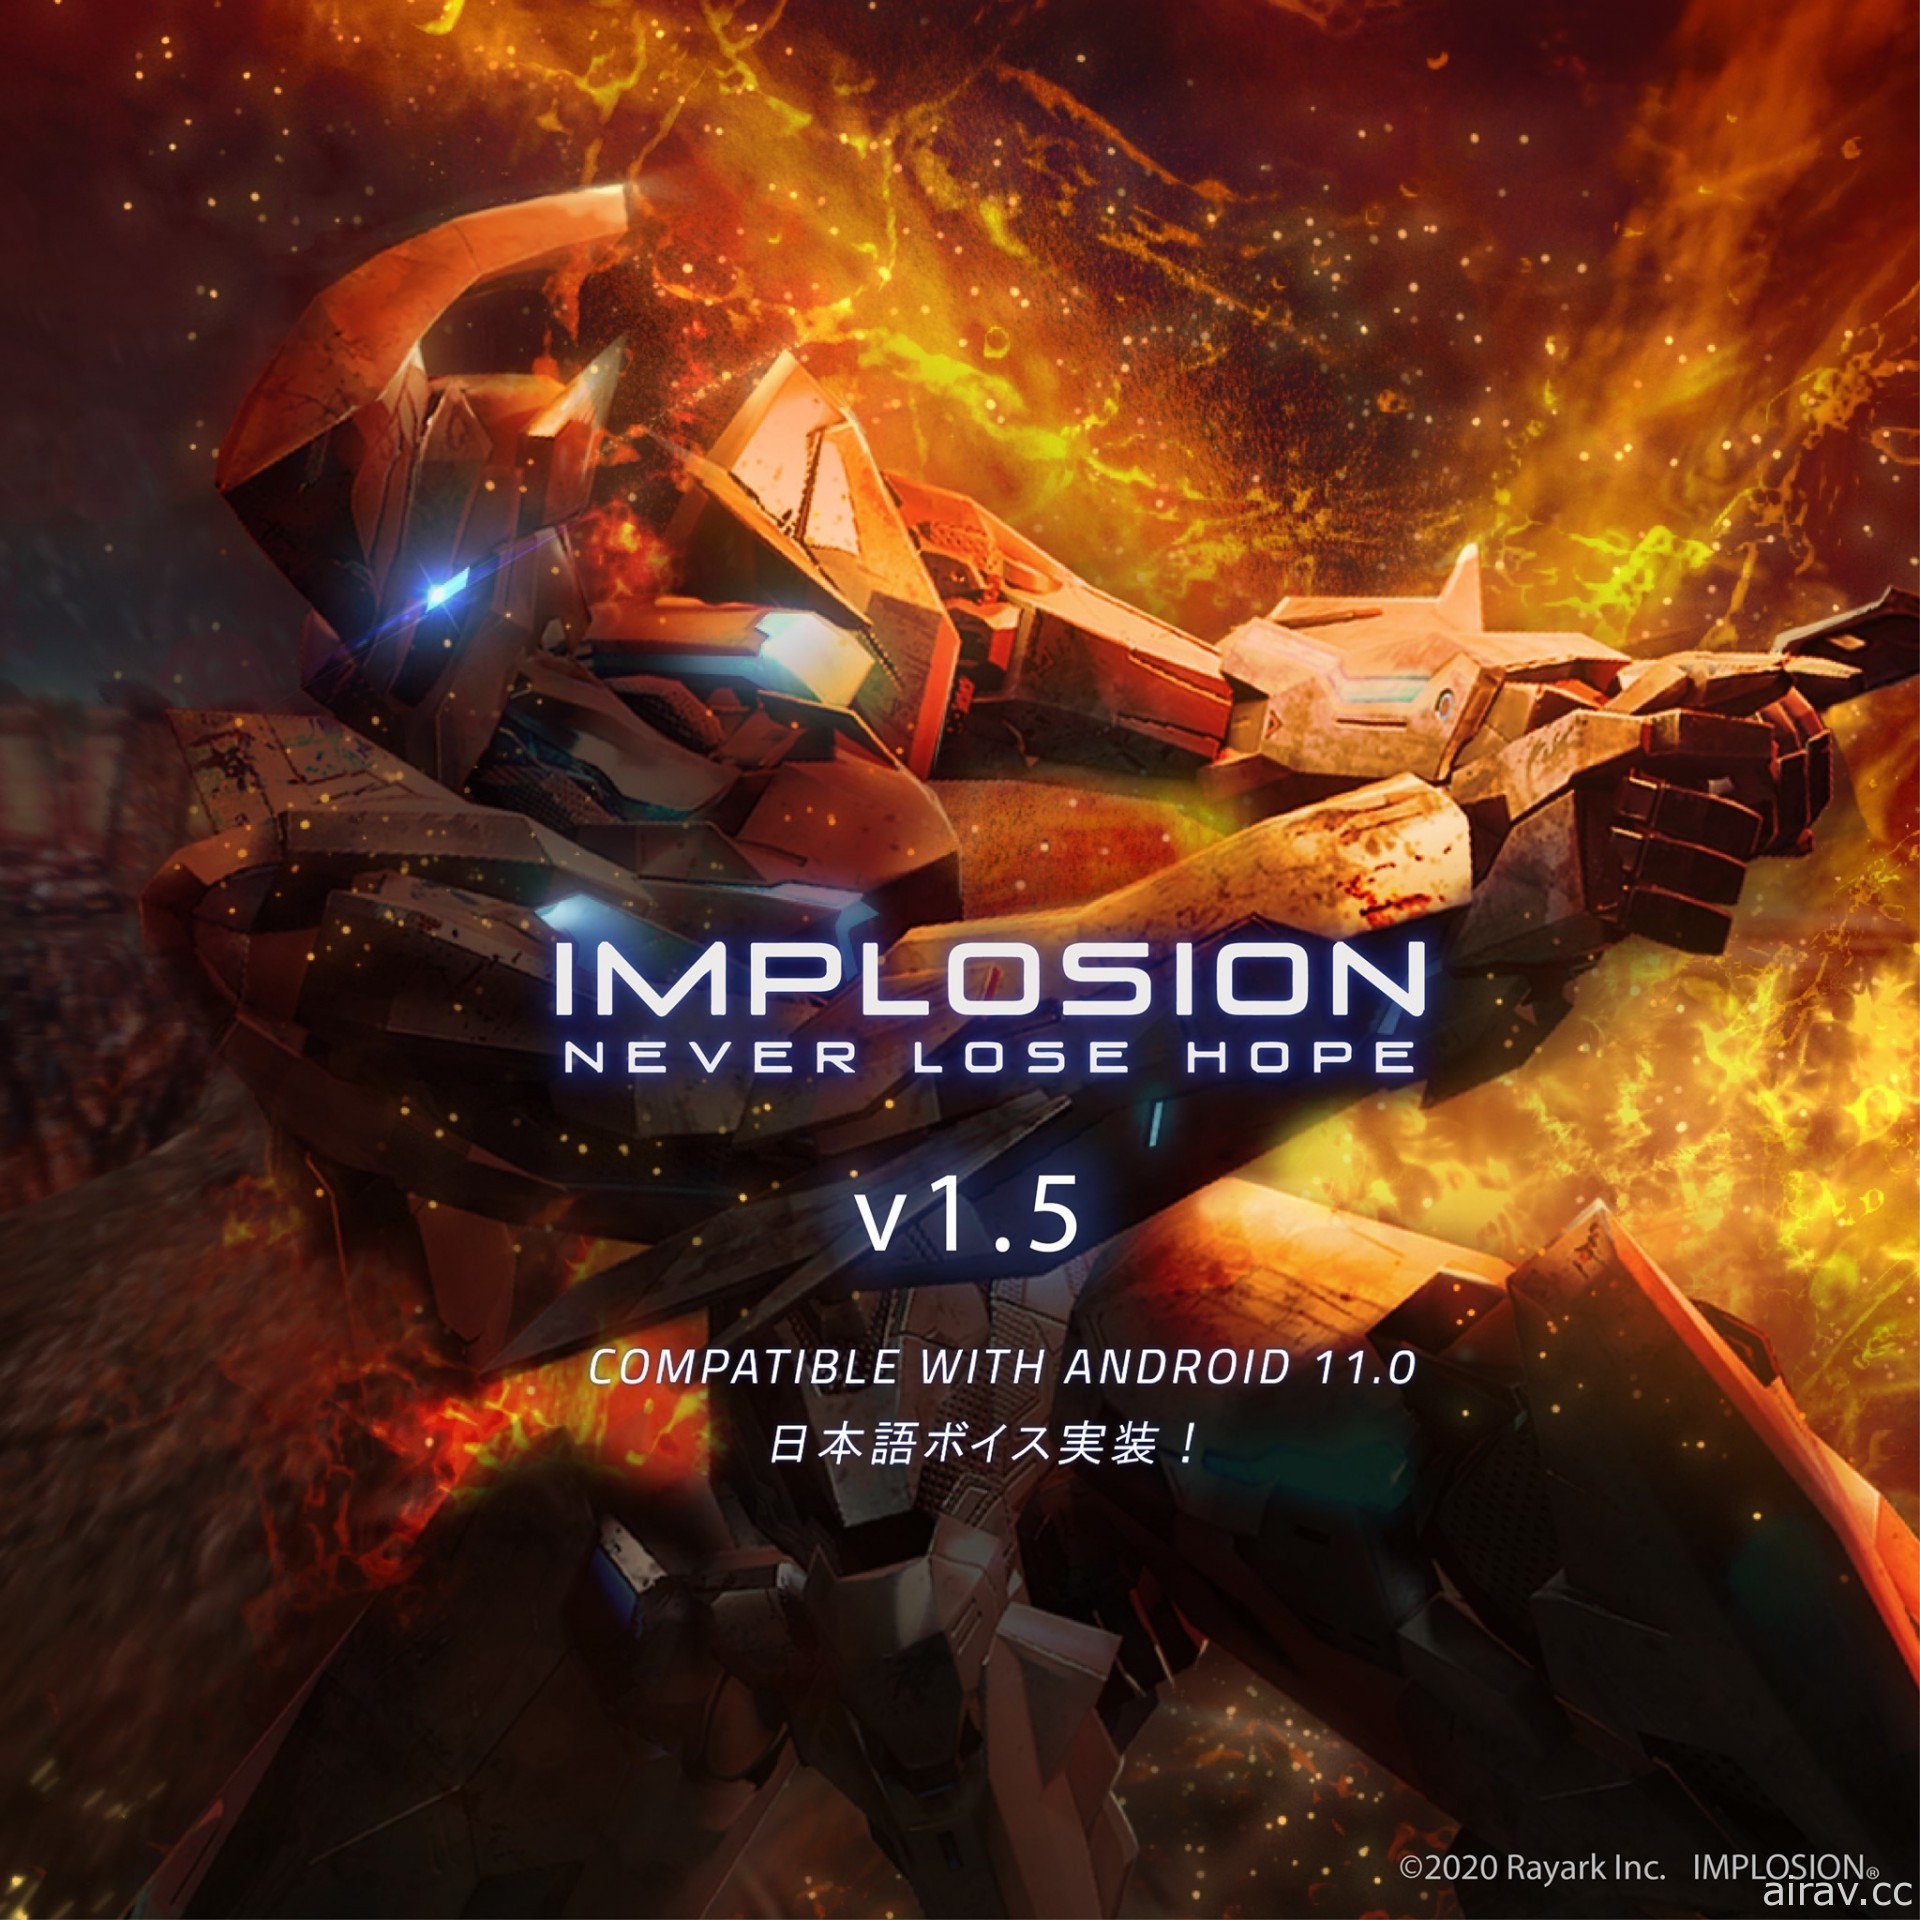 《Implosion 聚爆》於 v1.5 更新版本新增日文語音 推出 iOS、Android 版本限時特惠